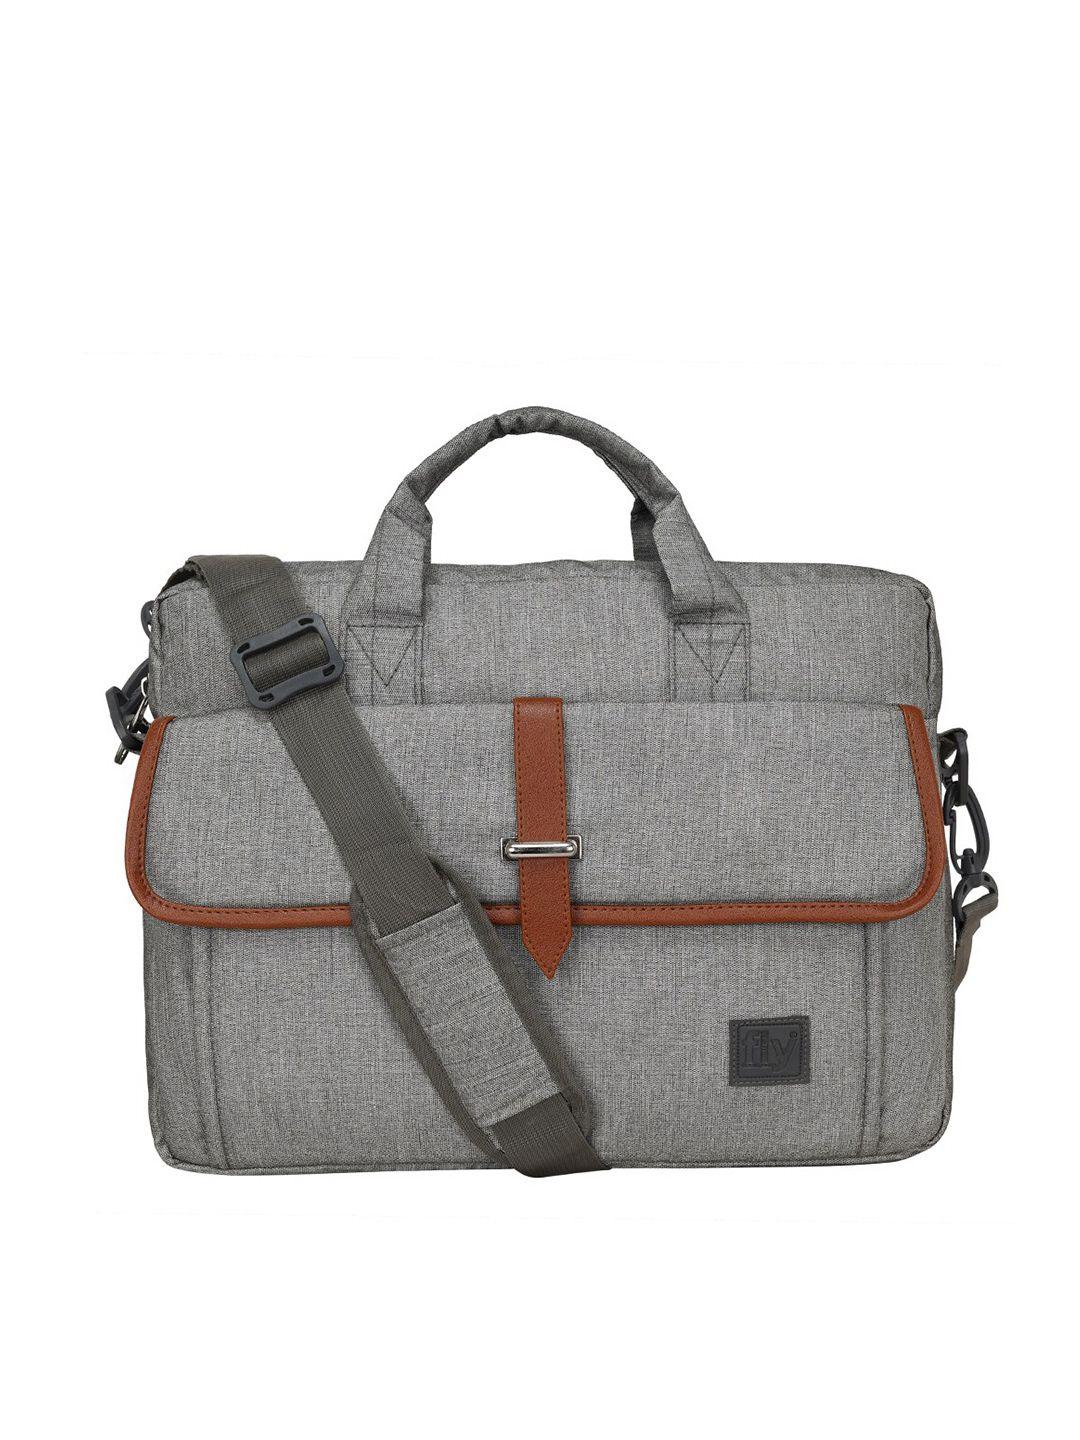 fly fashion unisex grey & brown textured laptop bag